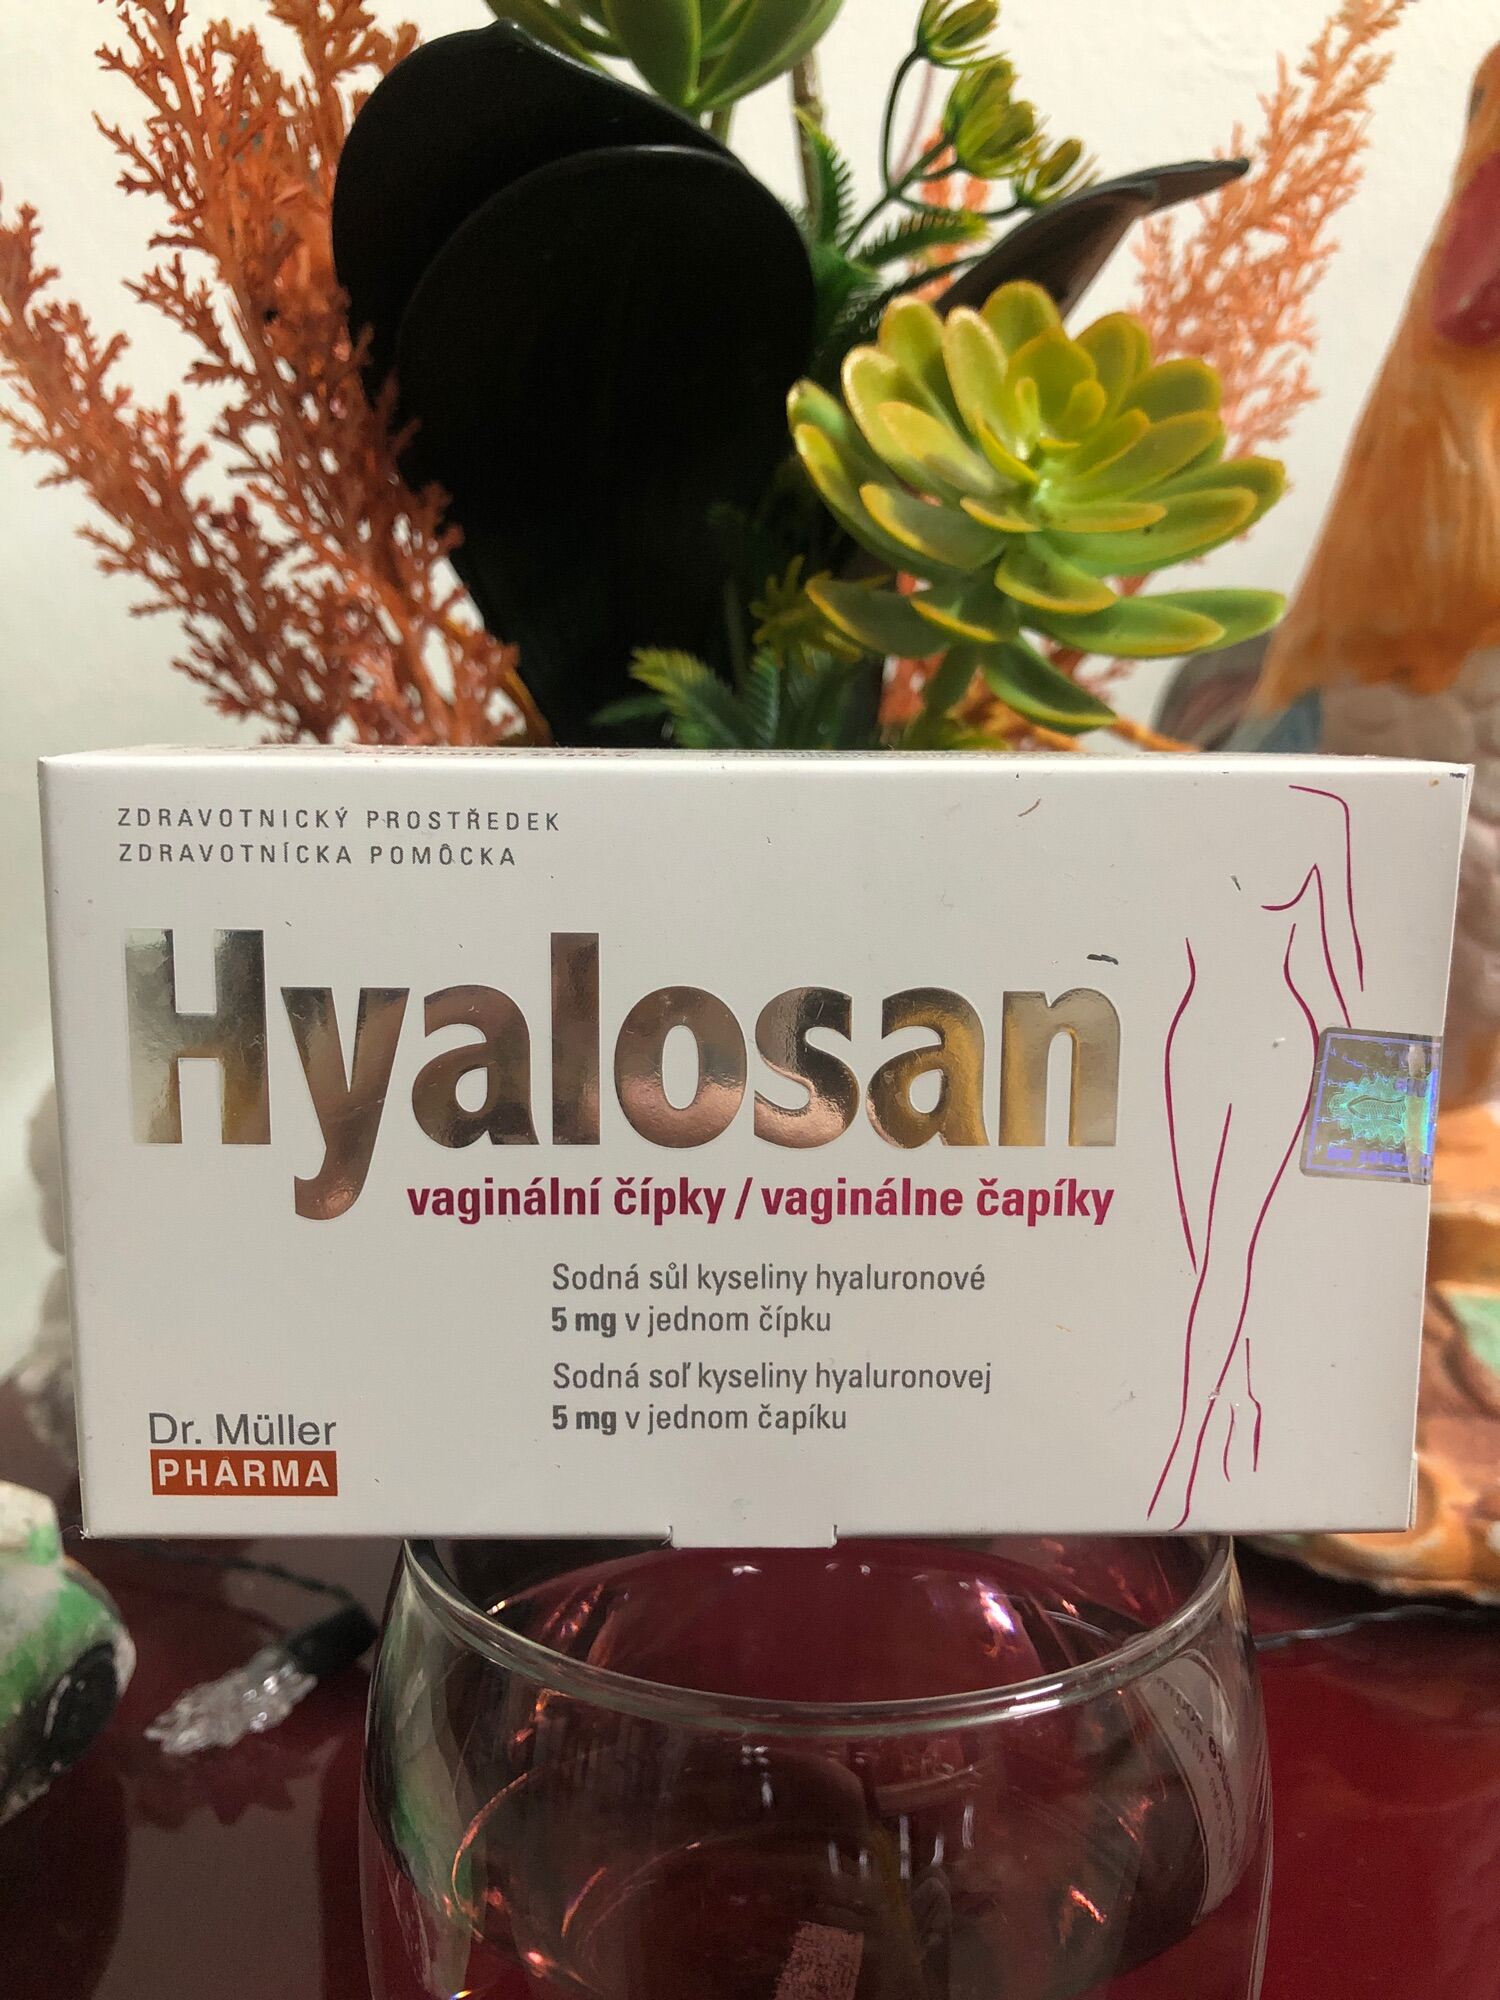 Hyalosan vaginal suppositoriesviên đặt phụ khoa